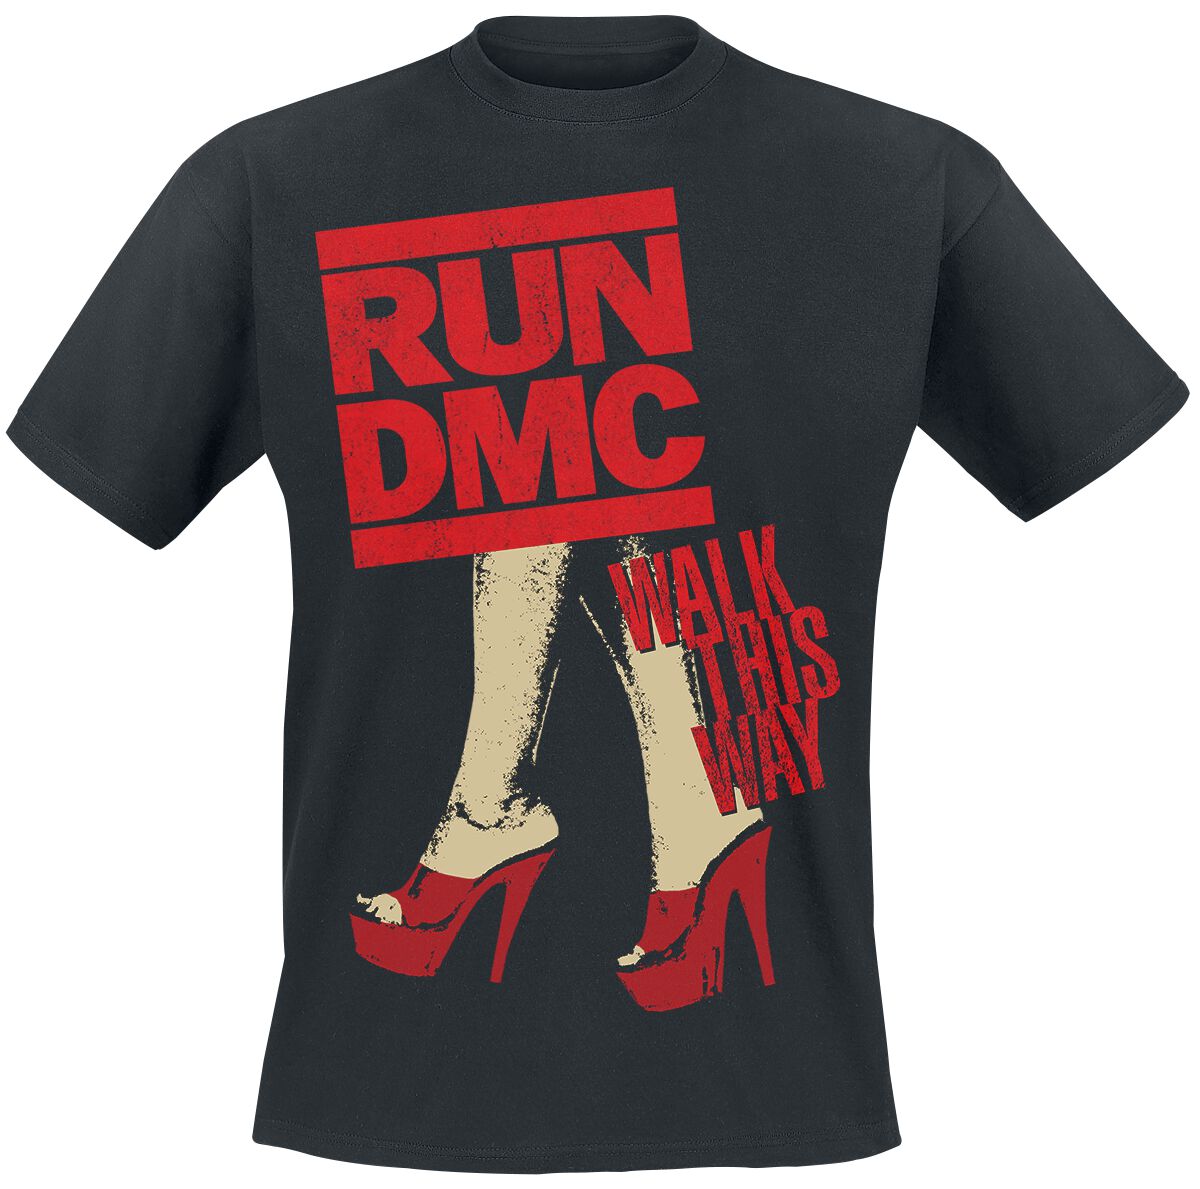 Run DMC Walk This Way Legs T-Shirt schwarz in M